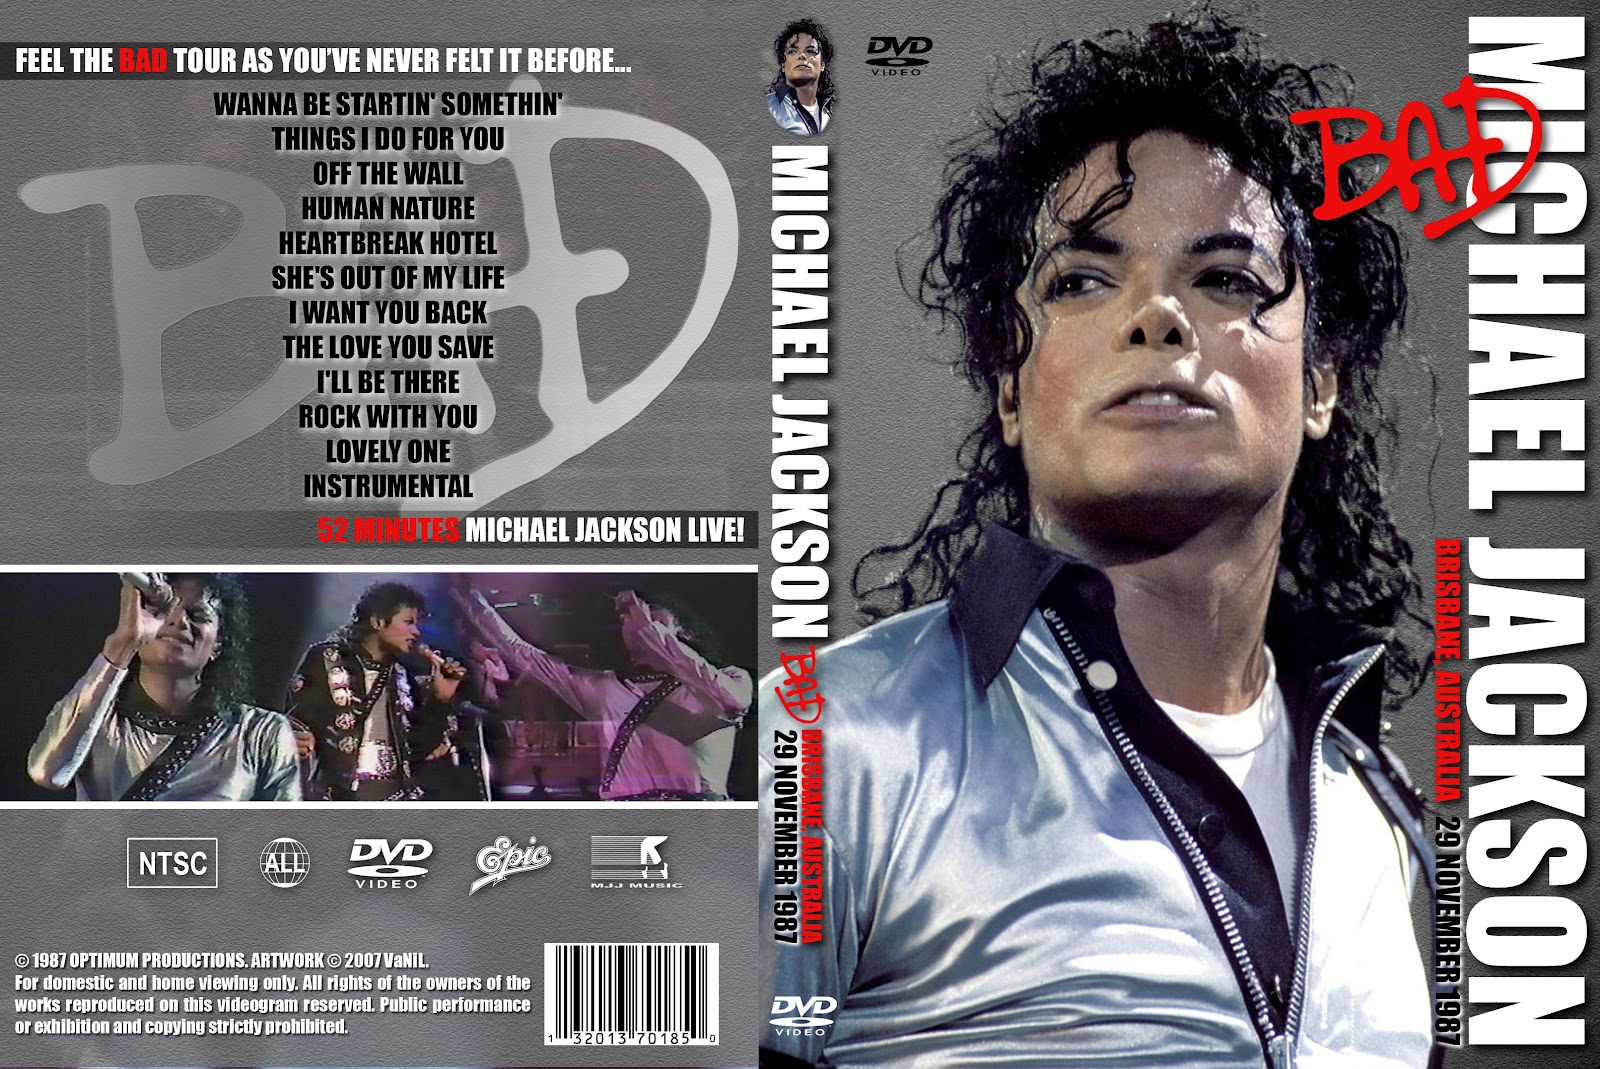 https://blogger.googleusercontent.com/img/b/R29vZ2xl/AVvXsEjWz9rhBXnFjsnGqNdRX67d1f3Pm7DuY0omtTGRa0dN6a84lNghyefDhf20WeIYw7Go0grHzud8wpKdip50UbtOib1xSEVWh4GVyhQODWbReFAY0rzJPfUJAAt9Em_qrCPbAAwziDSEVEZa/s1600/Michael+Jackson+-+Live+in+Bad+Tour+(Brisbane-Australia+1987)%5BDVD%5D%5BMJLand_ro%5D+-+DVD+COVER.jpg